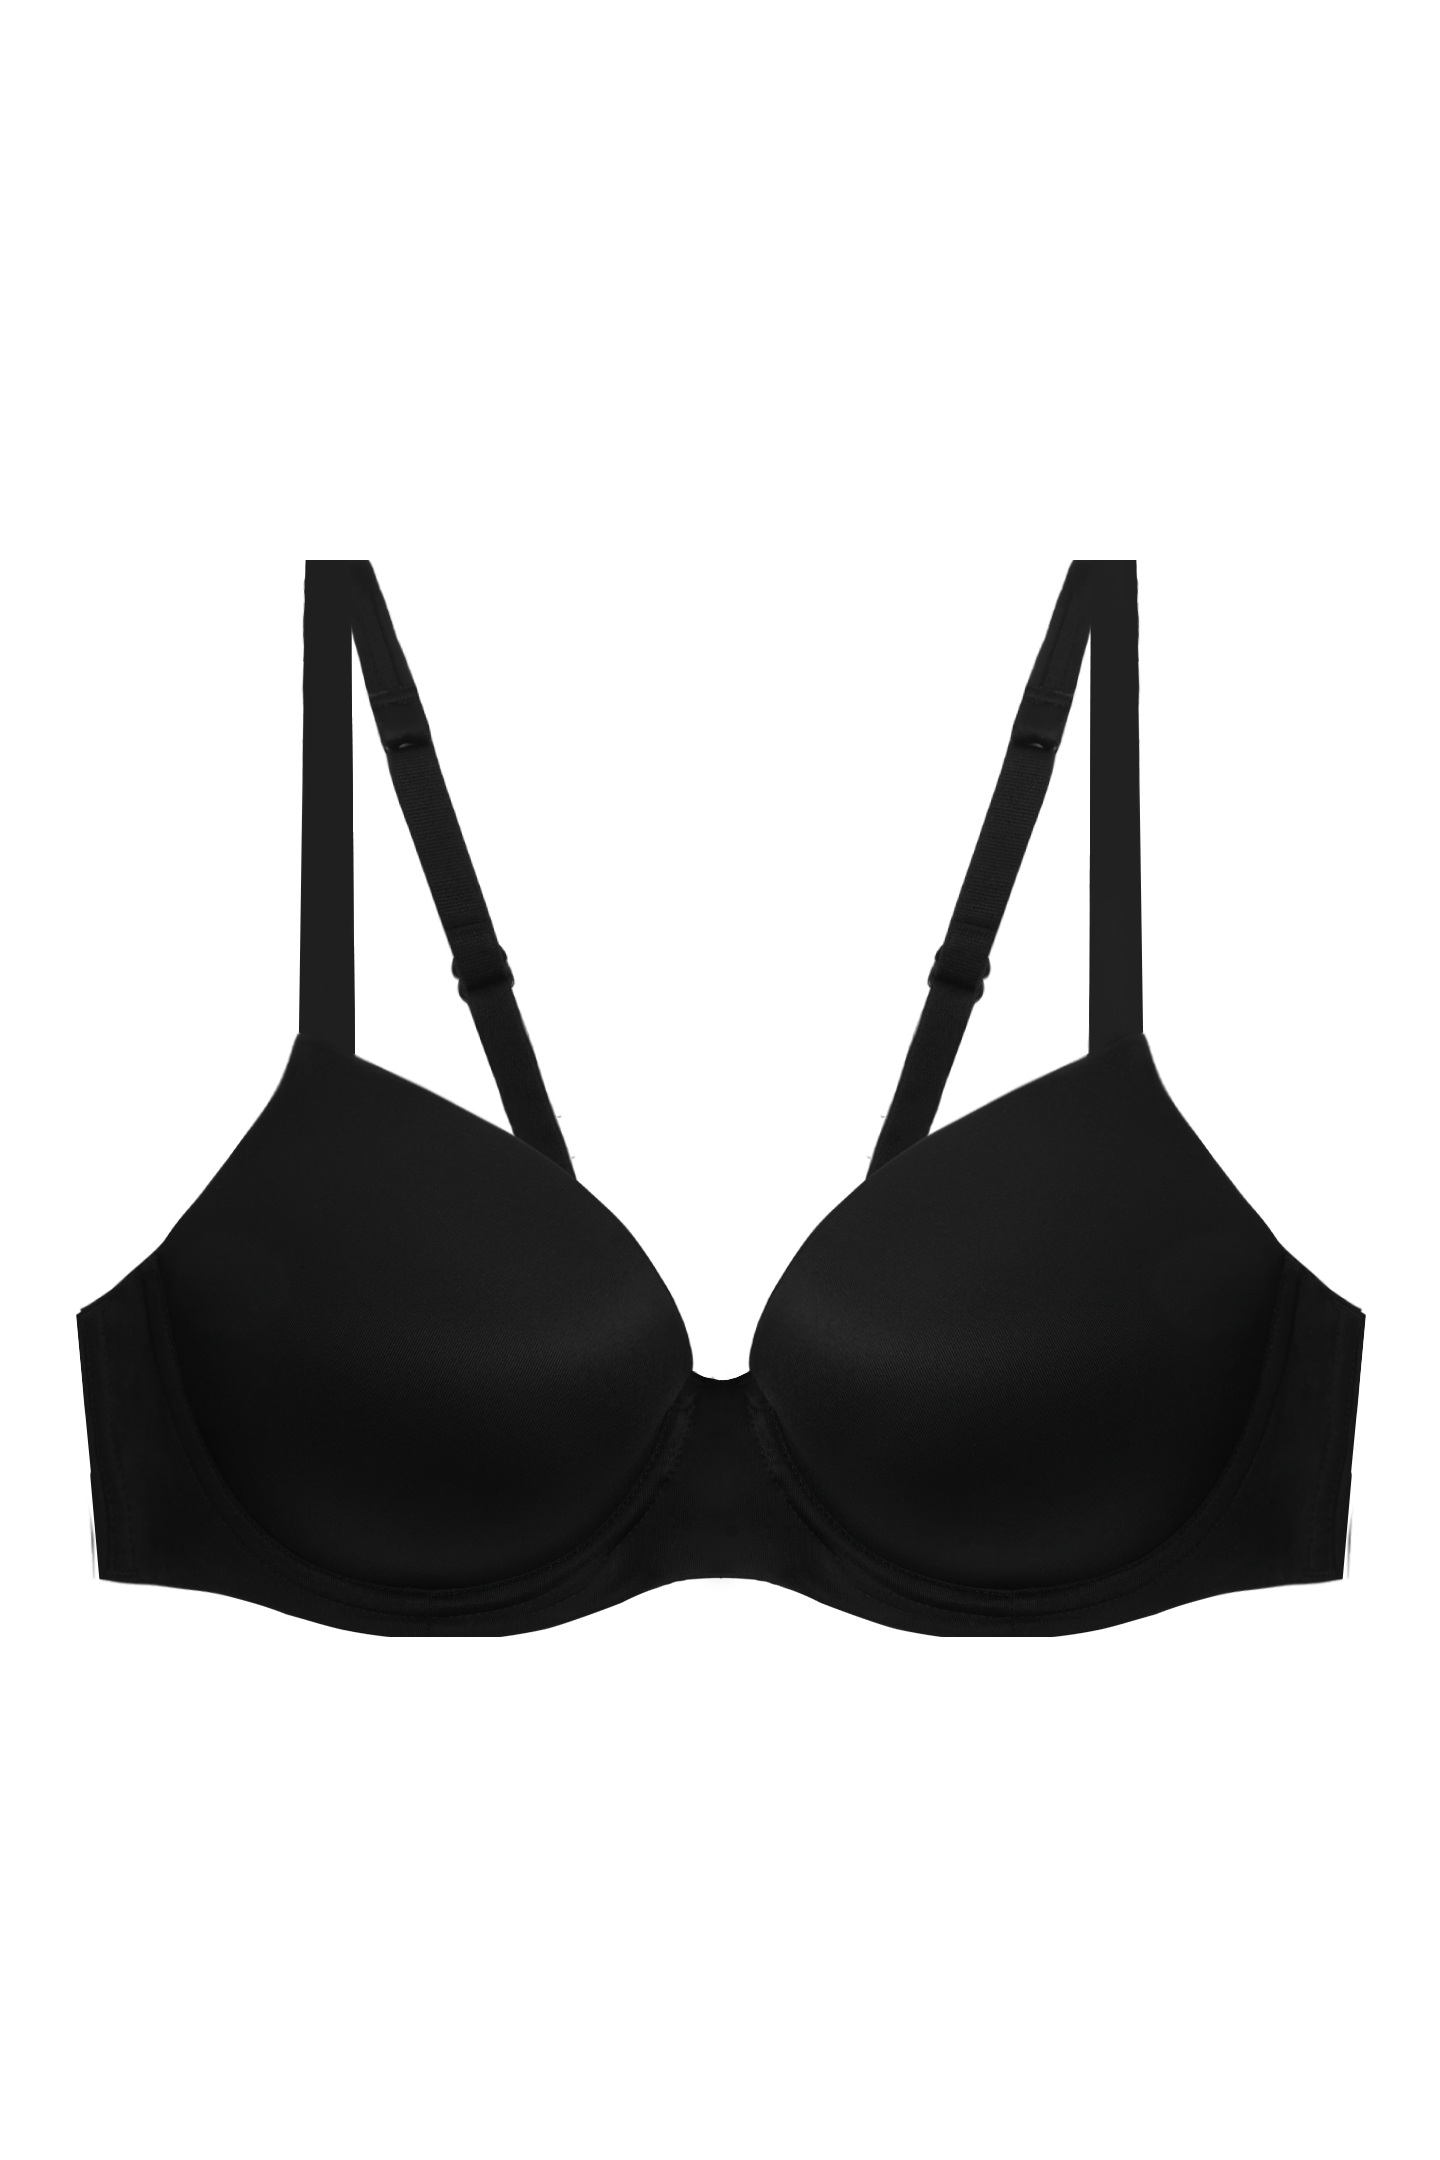 Dione/B1 push-up bra (Cream-Black) - Luxusintim